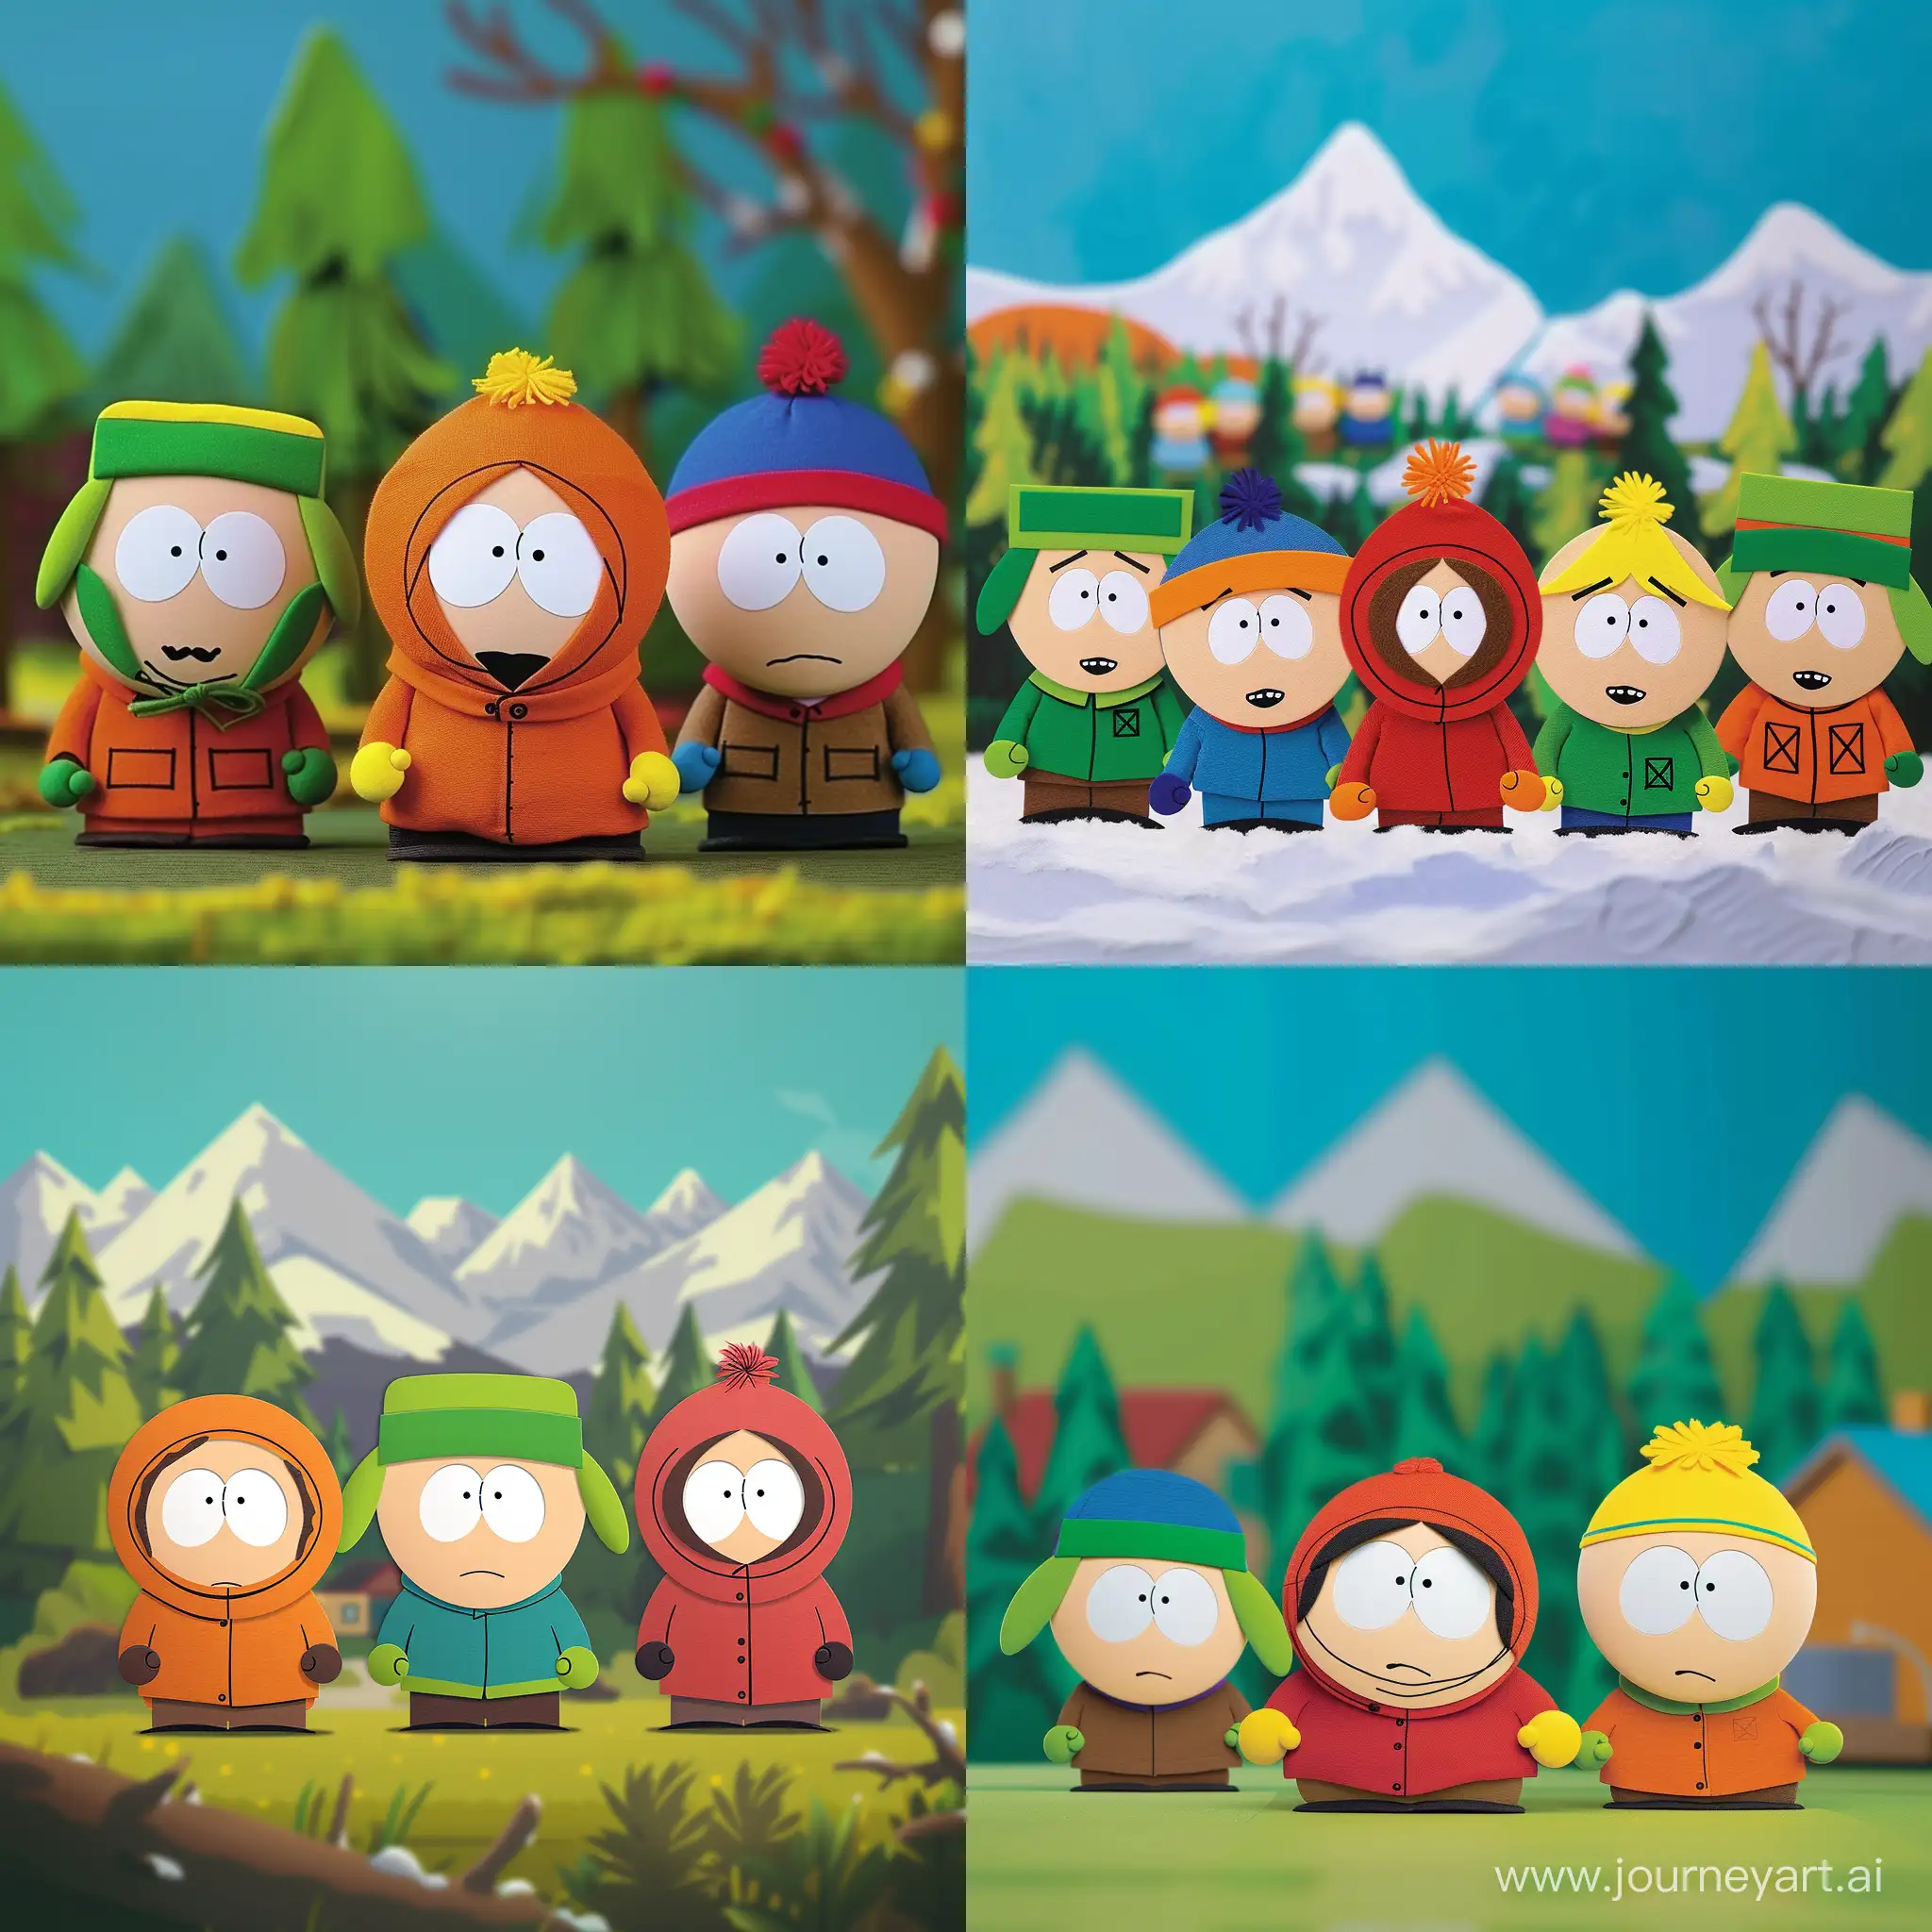 Colorful-South-Park-Character-Artwork-Vibrant-6th-Version-Square-Aspect-Ratio-Illustration